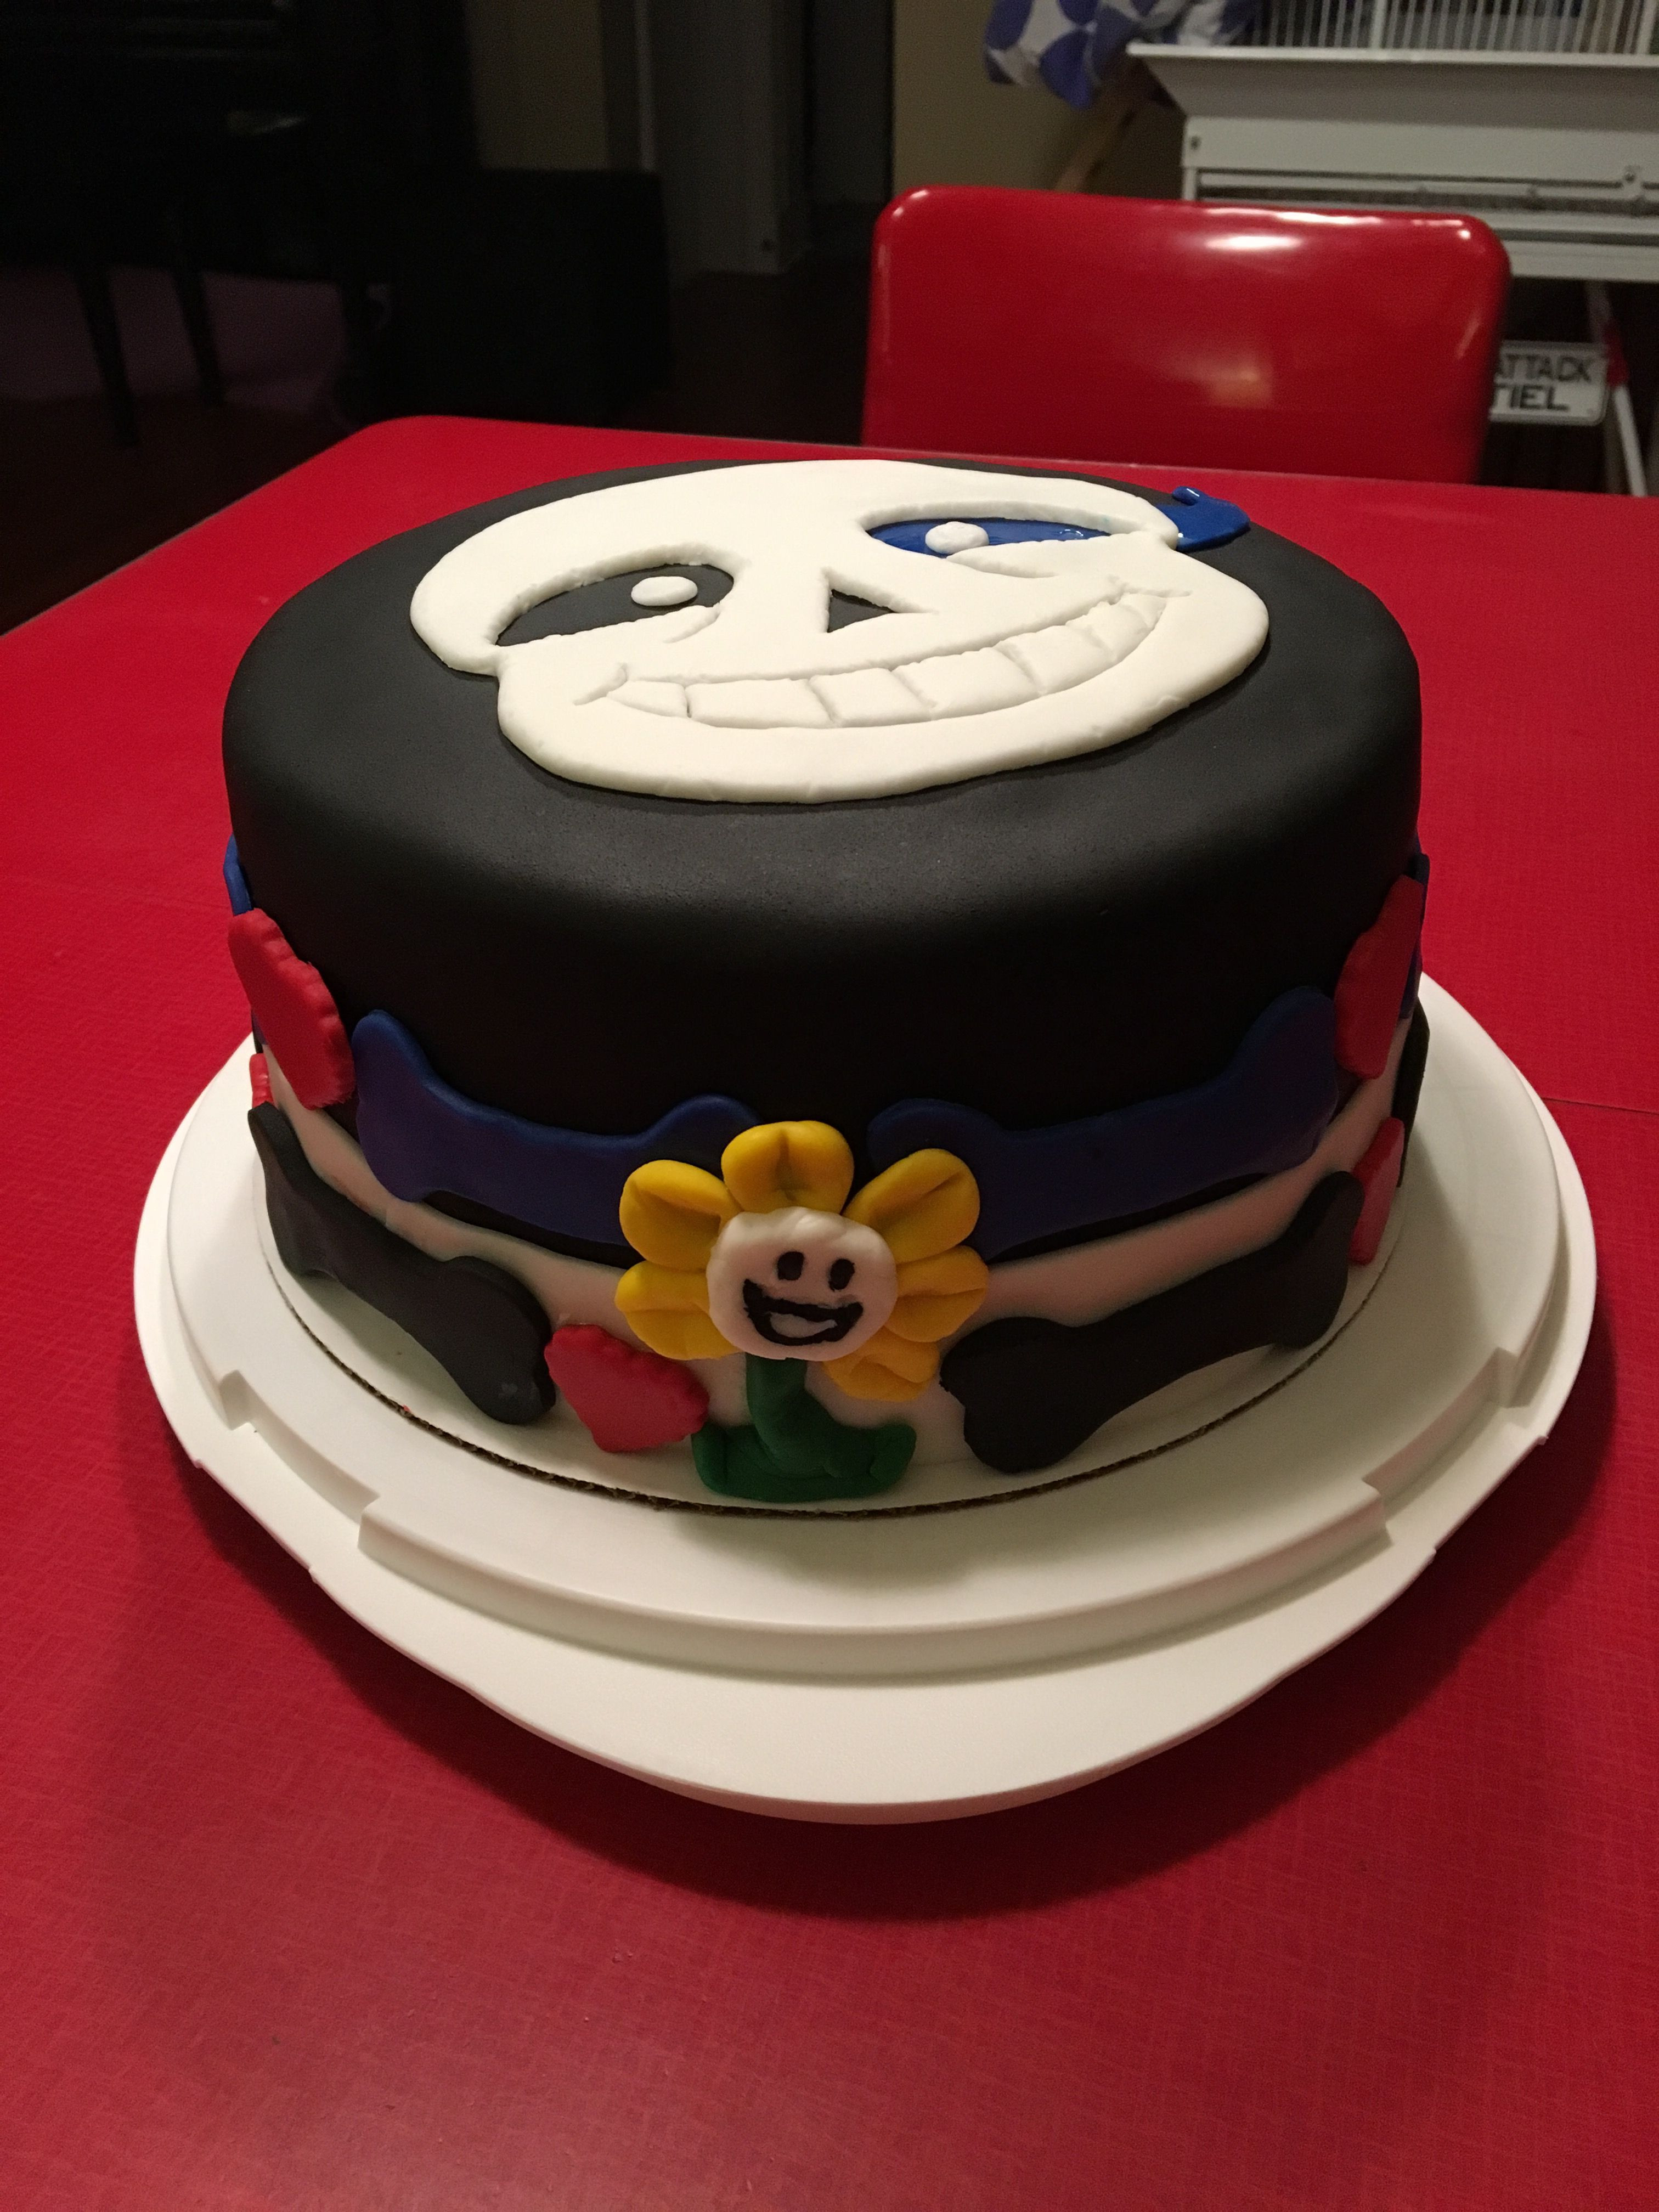 Best ideas about Undertale Birthday Cake
. Save or Pin Undertale Birthday Cake Sans and Flowey Now.